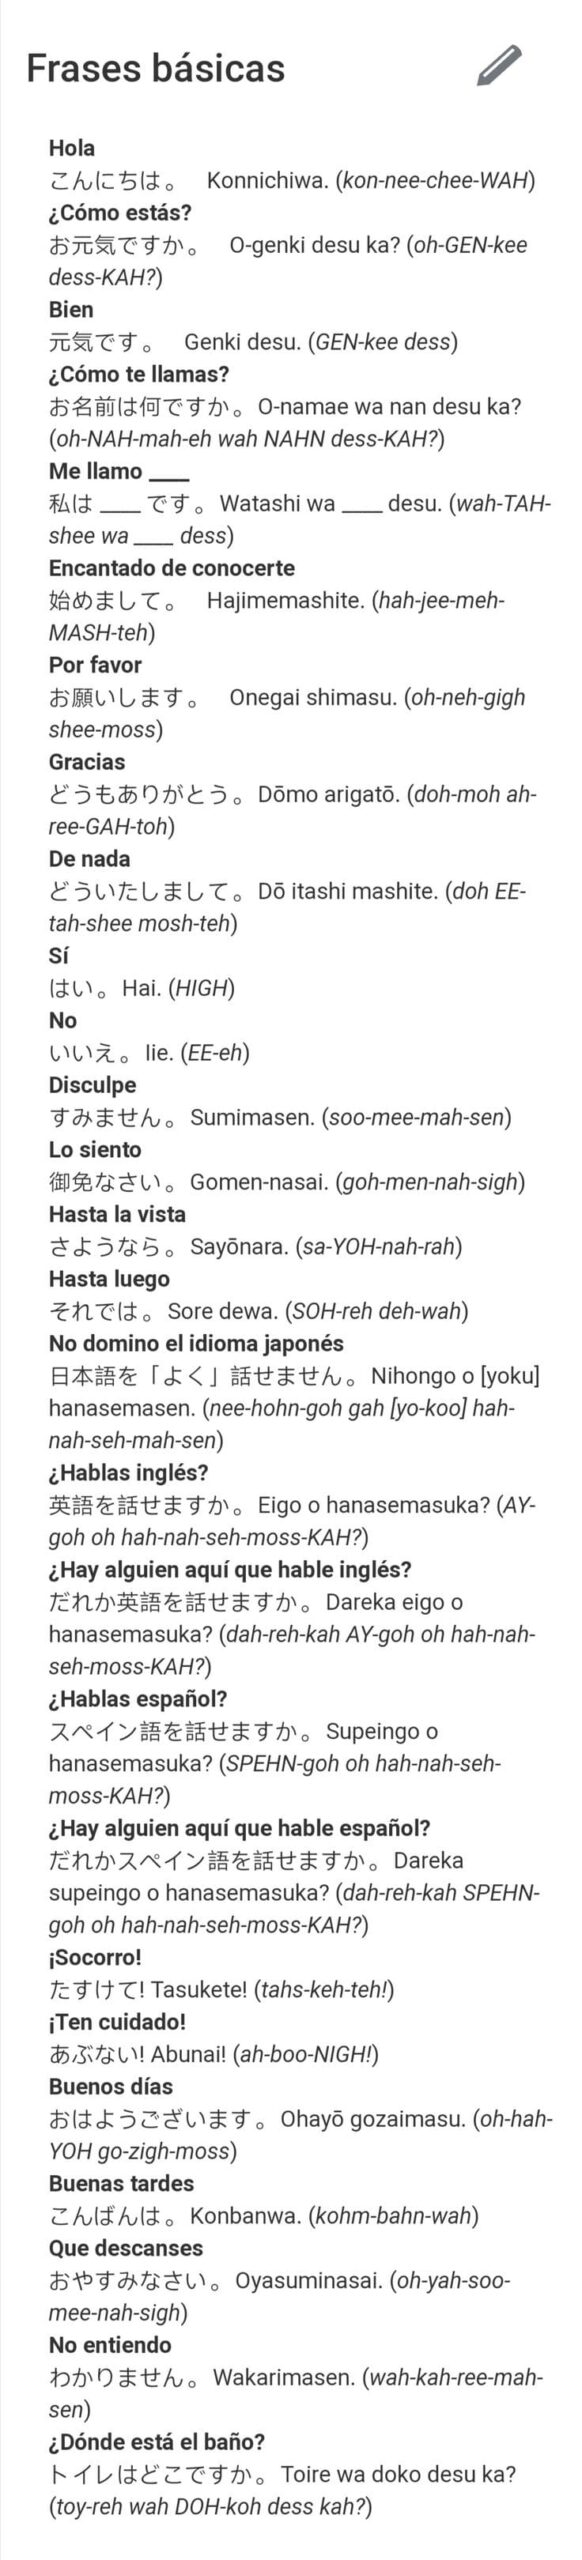 libros para aprender japonés pdf gratis